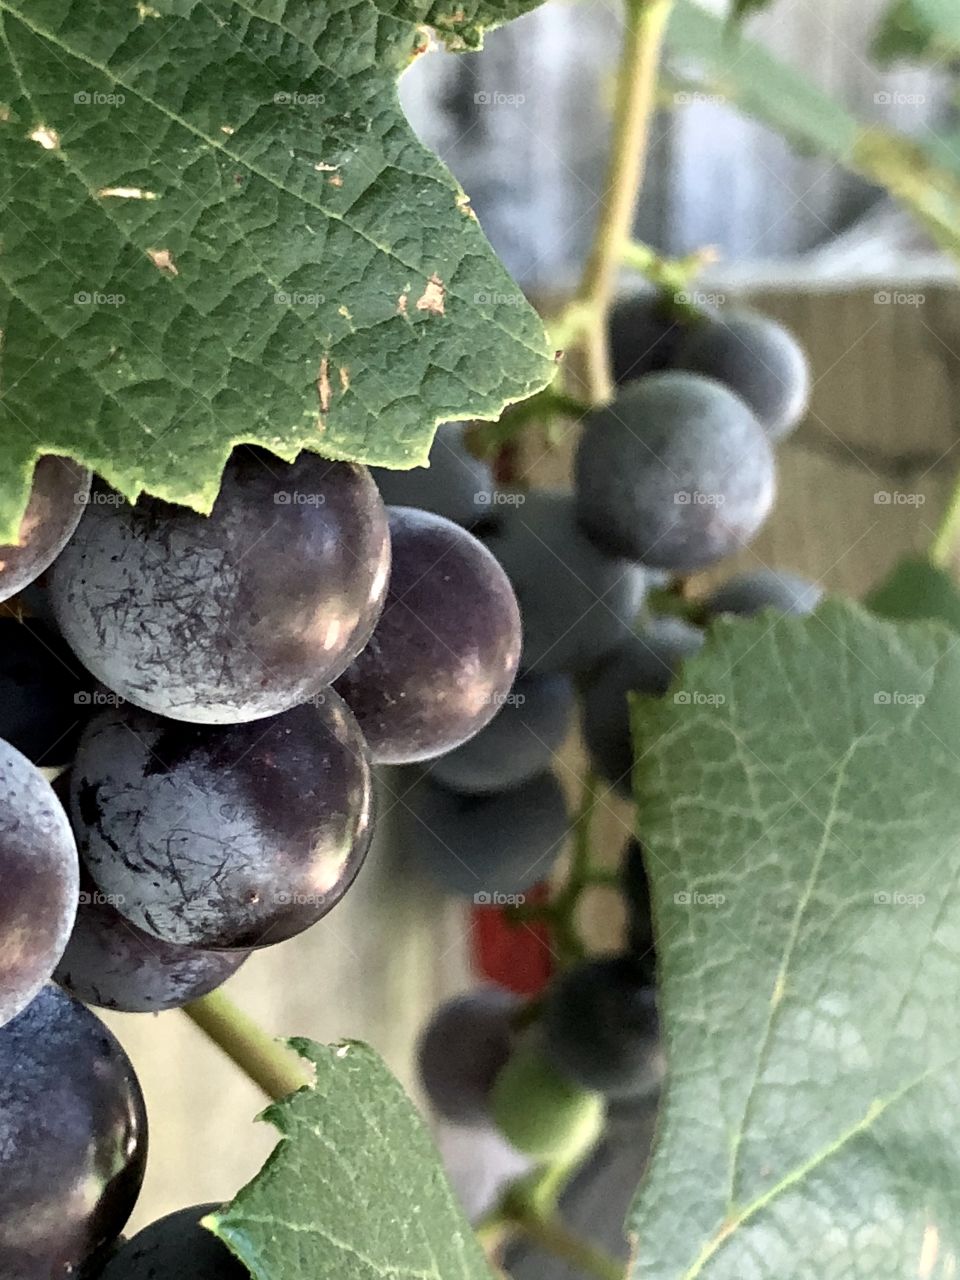 Backyard grapes